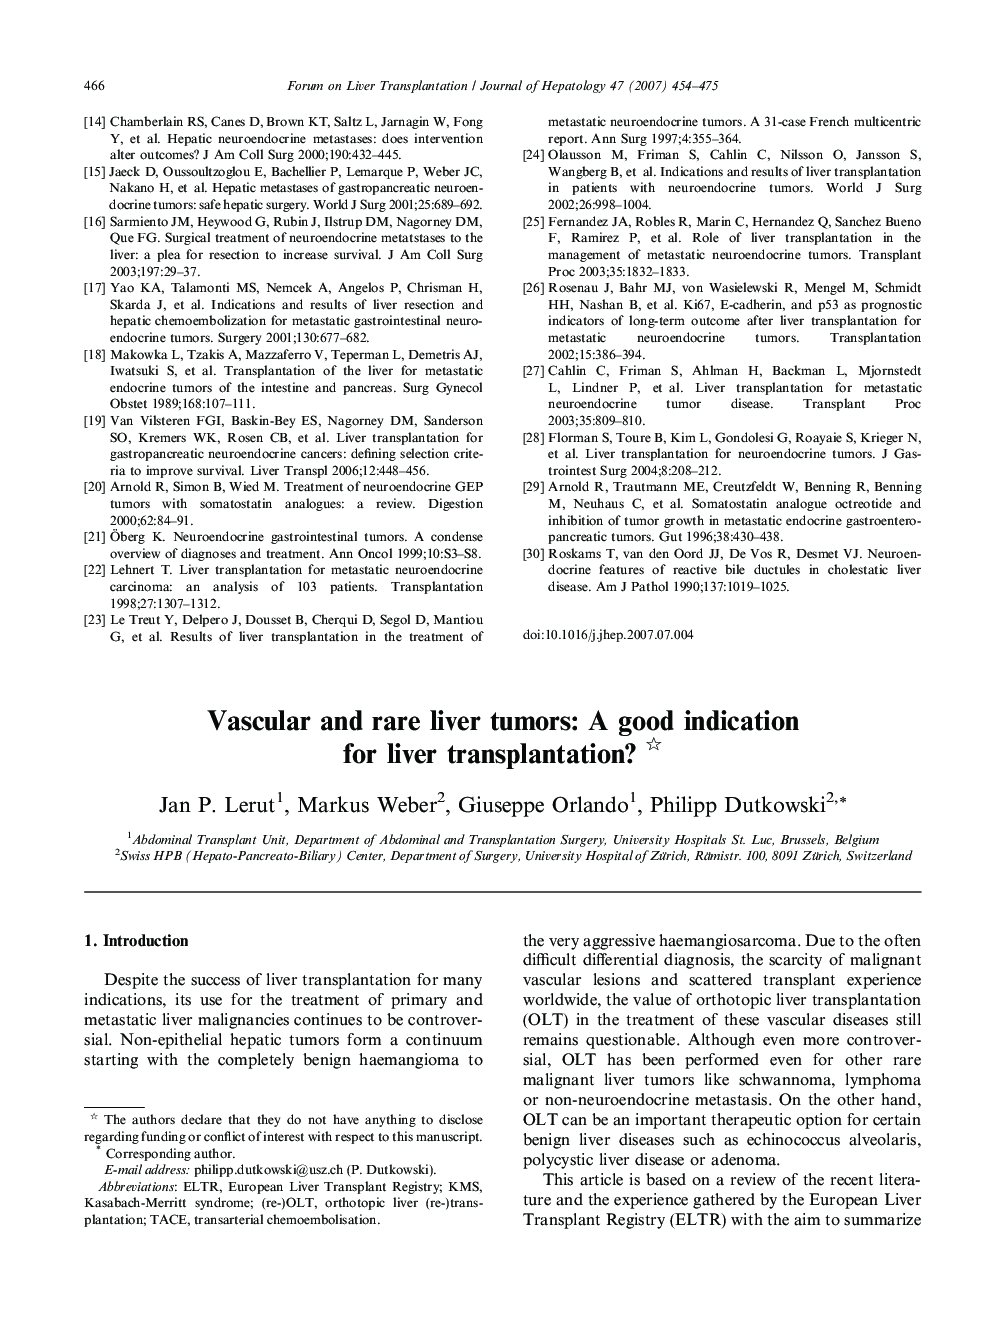 Vascular and rare liver tumors: A good indication for liver transplantation?